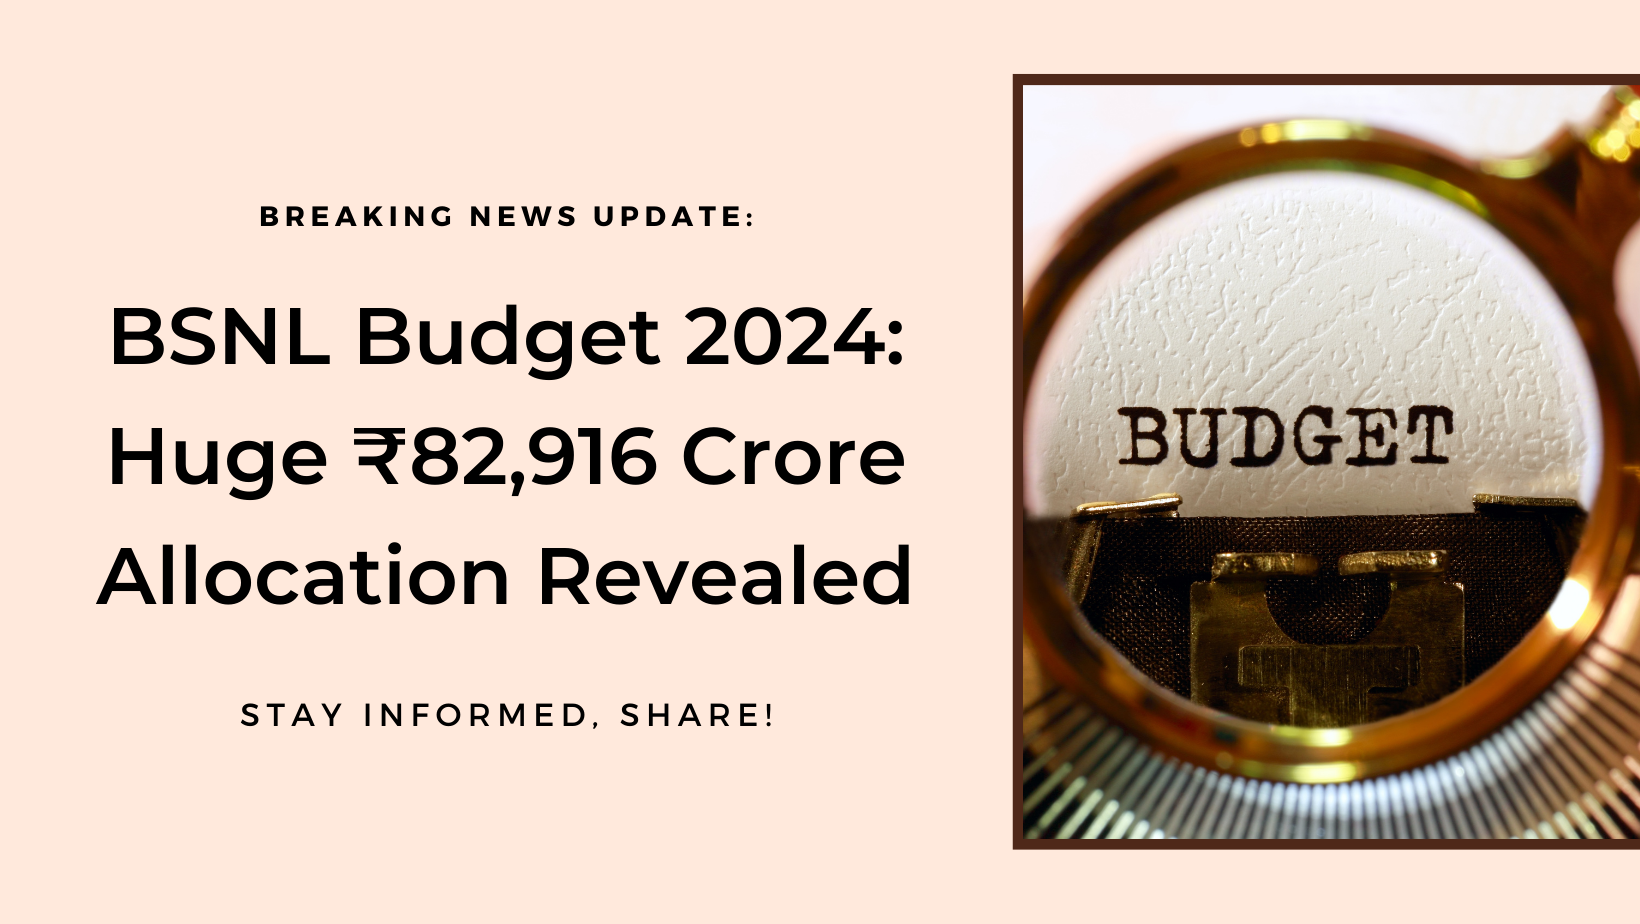 BSNL Budget 2024: Massive Allocation of ₹82,916 Crore Announced